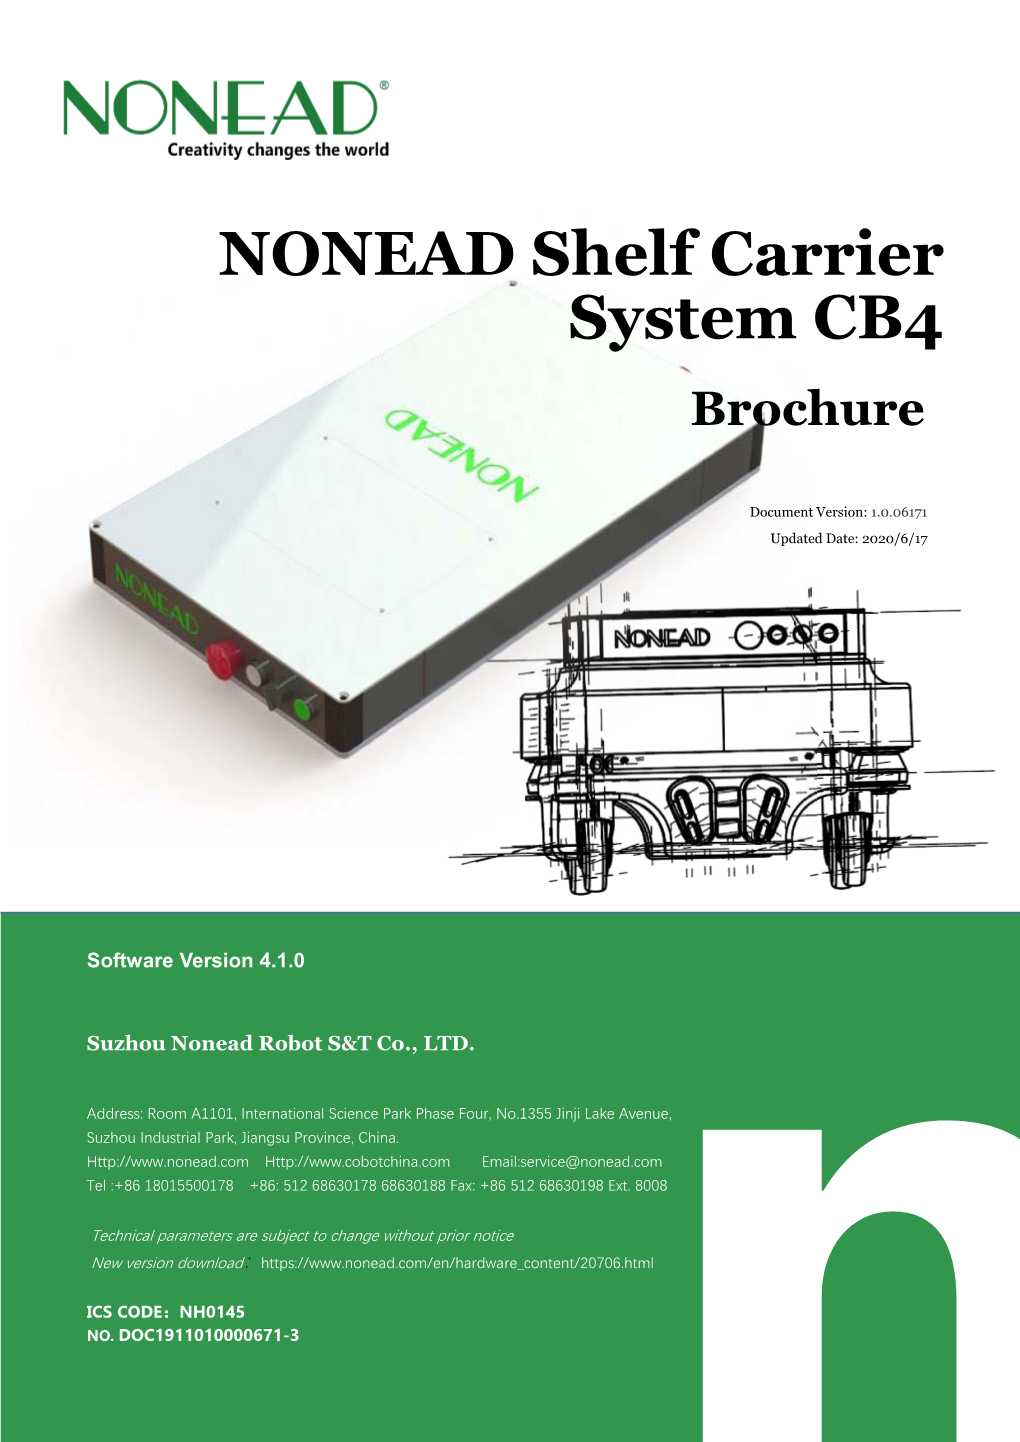 NONEAD Shelf Carrier System CB4 Brochure